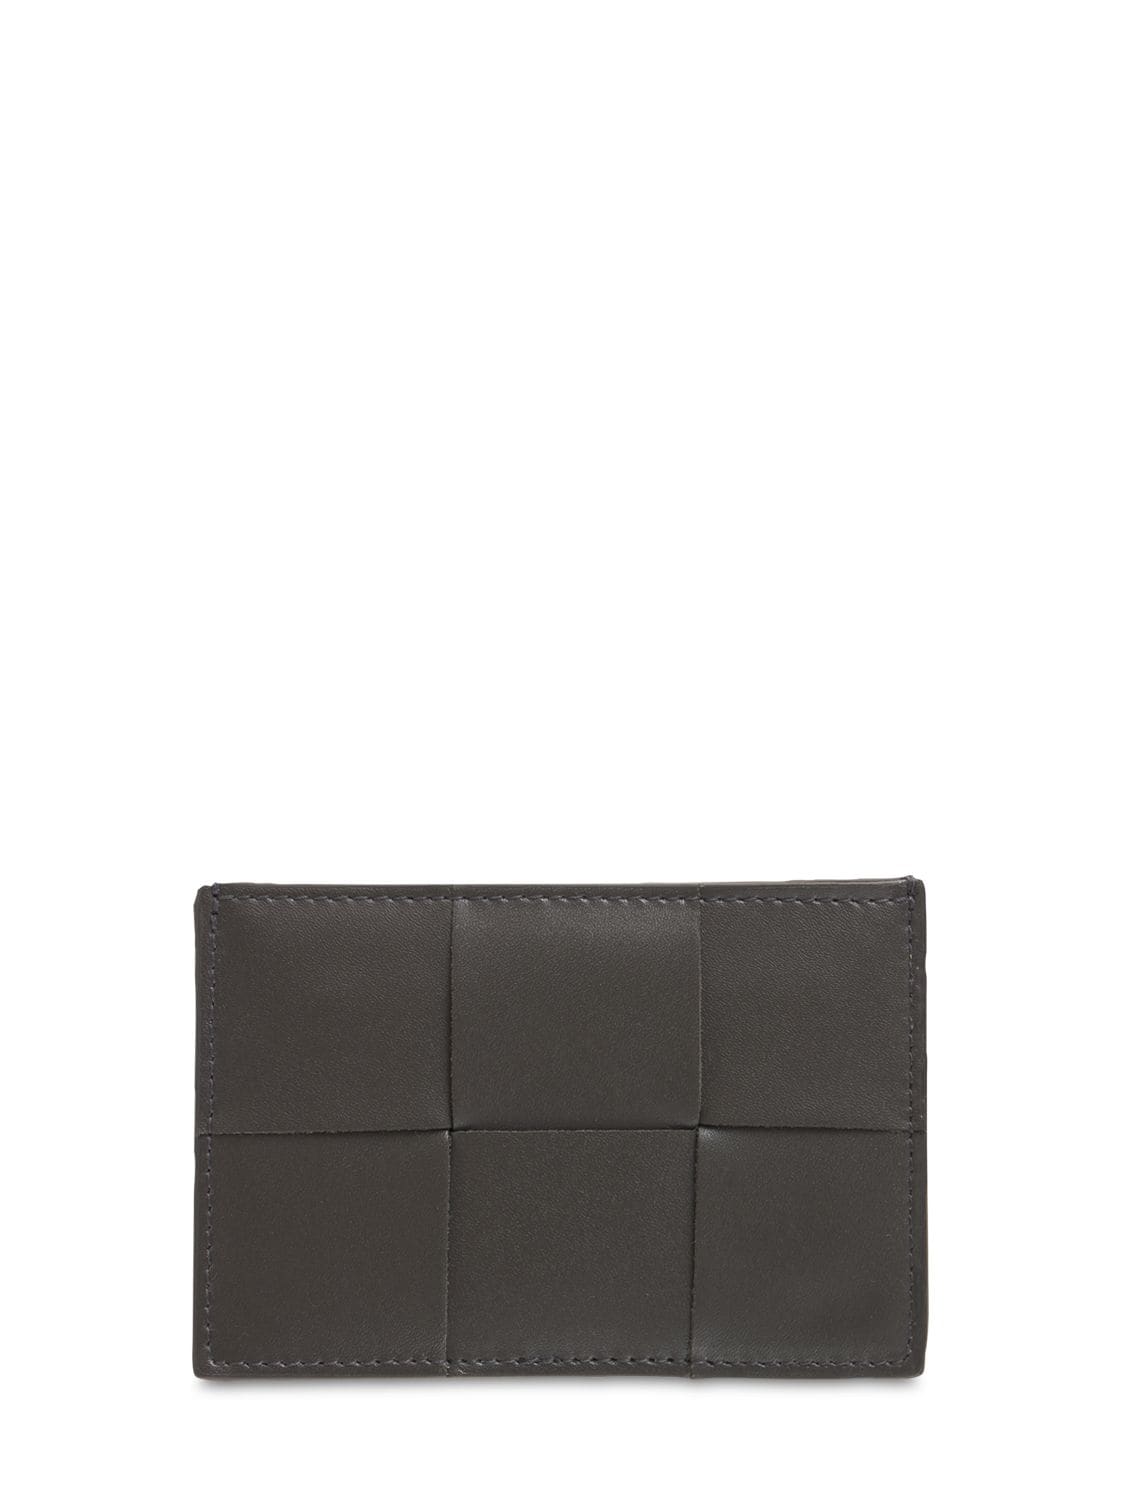 Bottega Veneta Maxi Intreccio Urban Leather Card Holder In Light Graphite